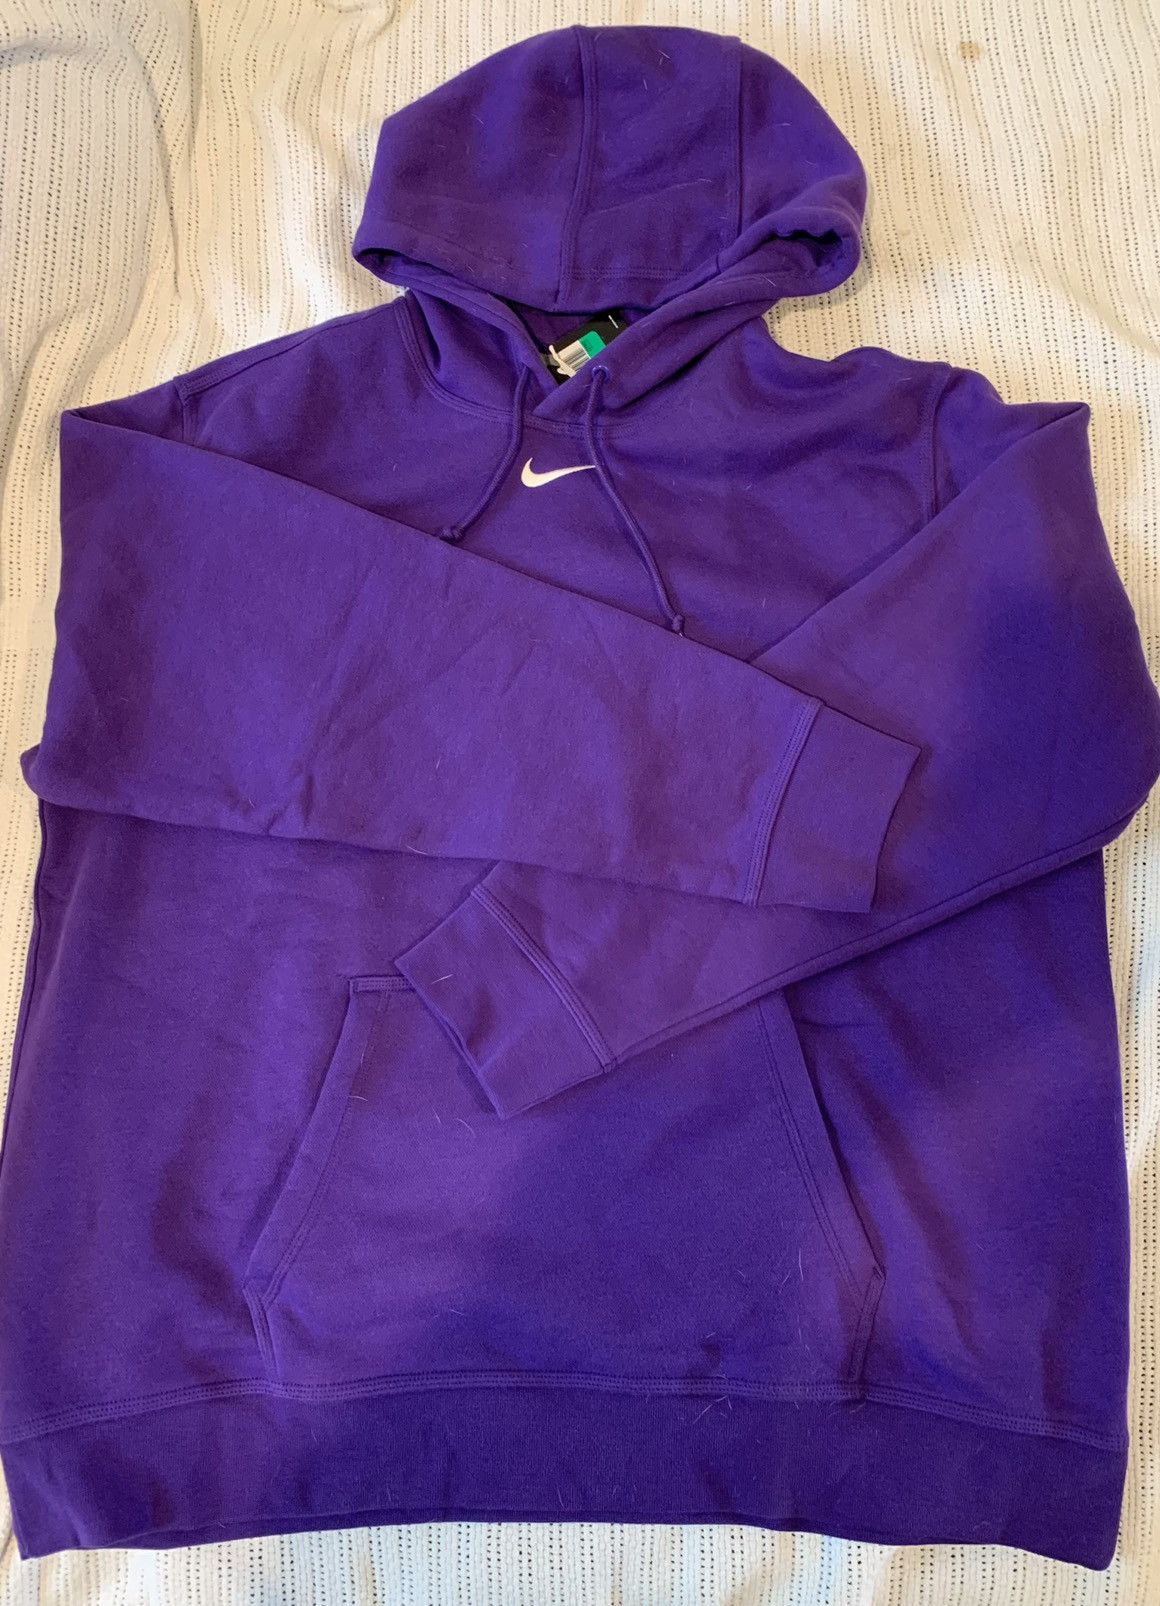 Nike Purple Nike Center Swoosh Hoodie Sweatshirt New Size US XL / EU 56 / 4 - 1 Preview